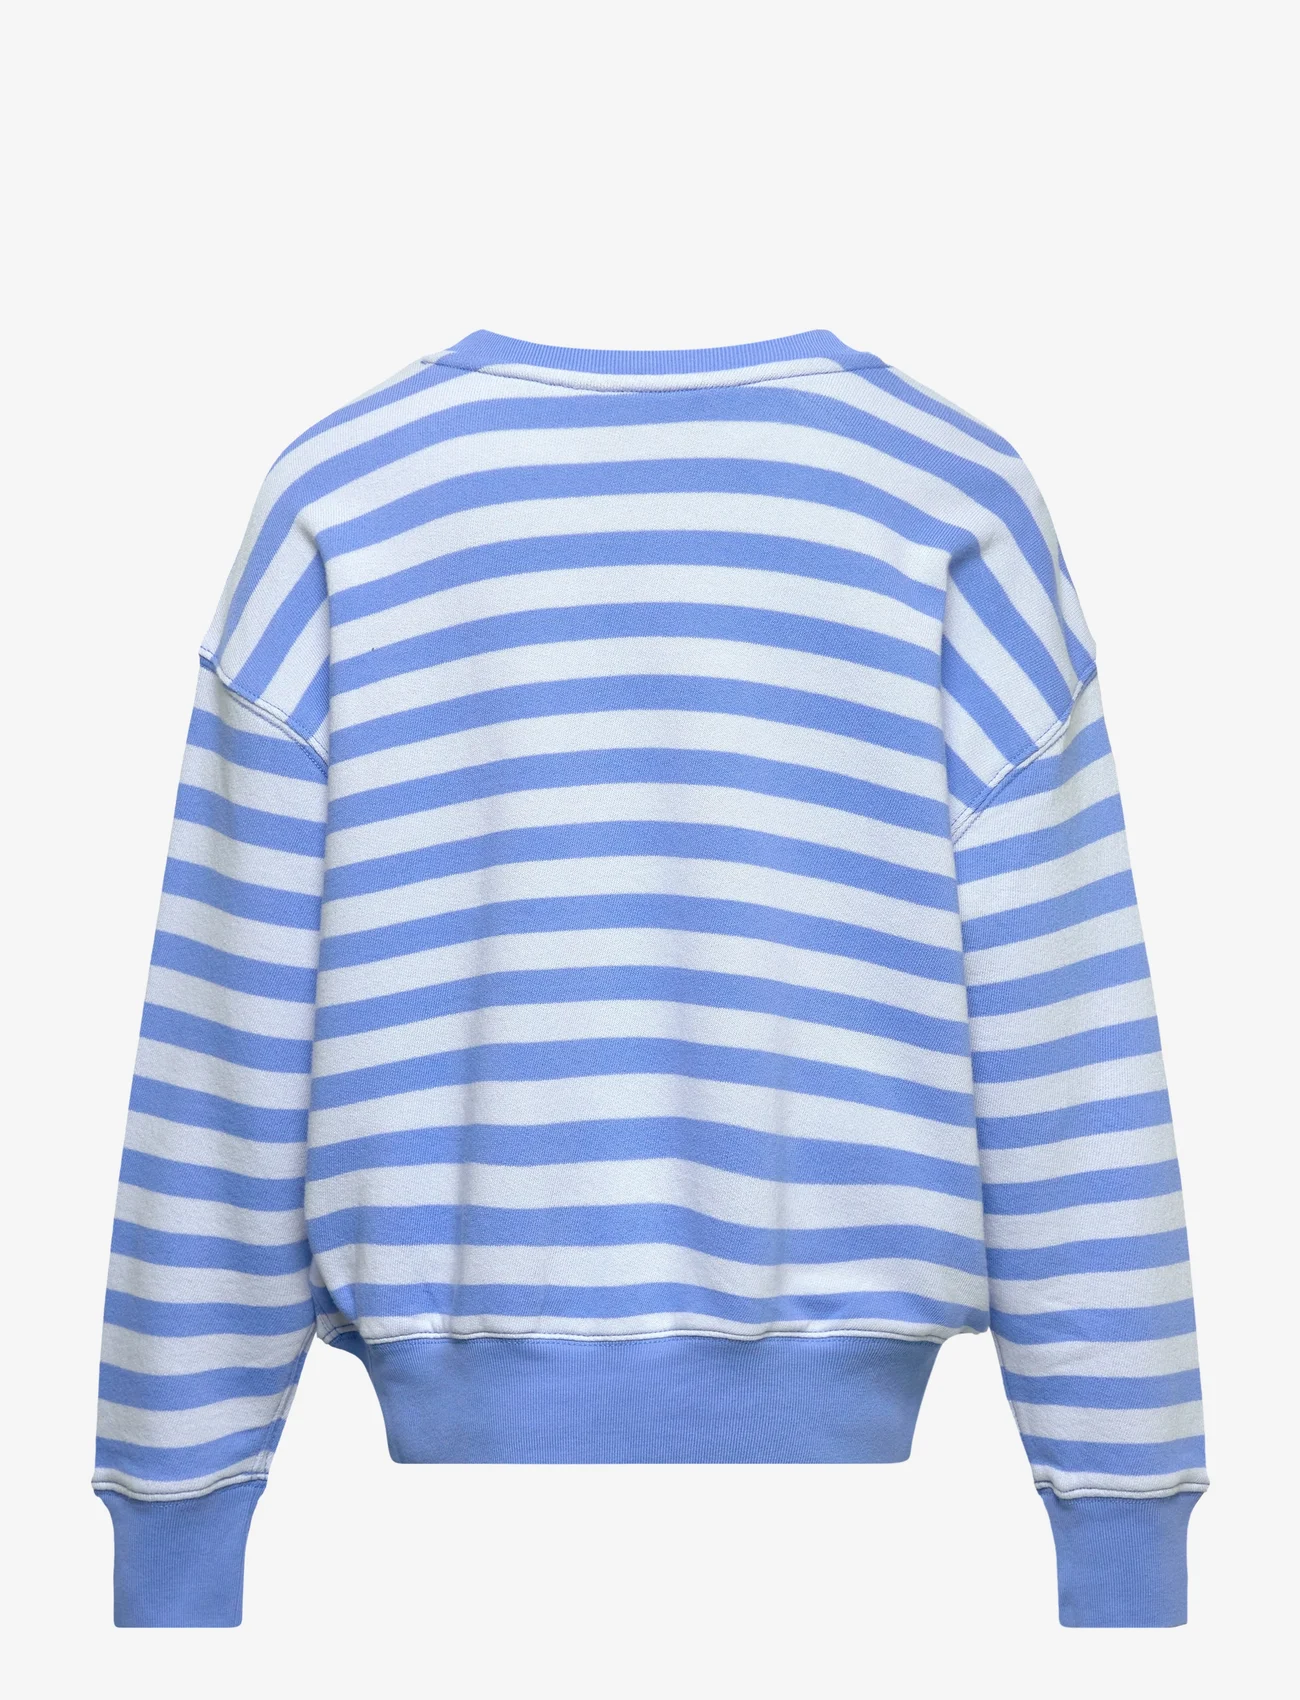 Ralph Lauren Kids - Polo Bear French Terry Sweatshirt - sweatshirts - harbor island blu - 1